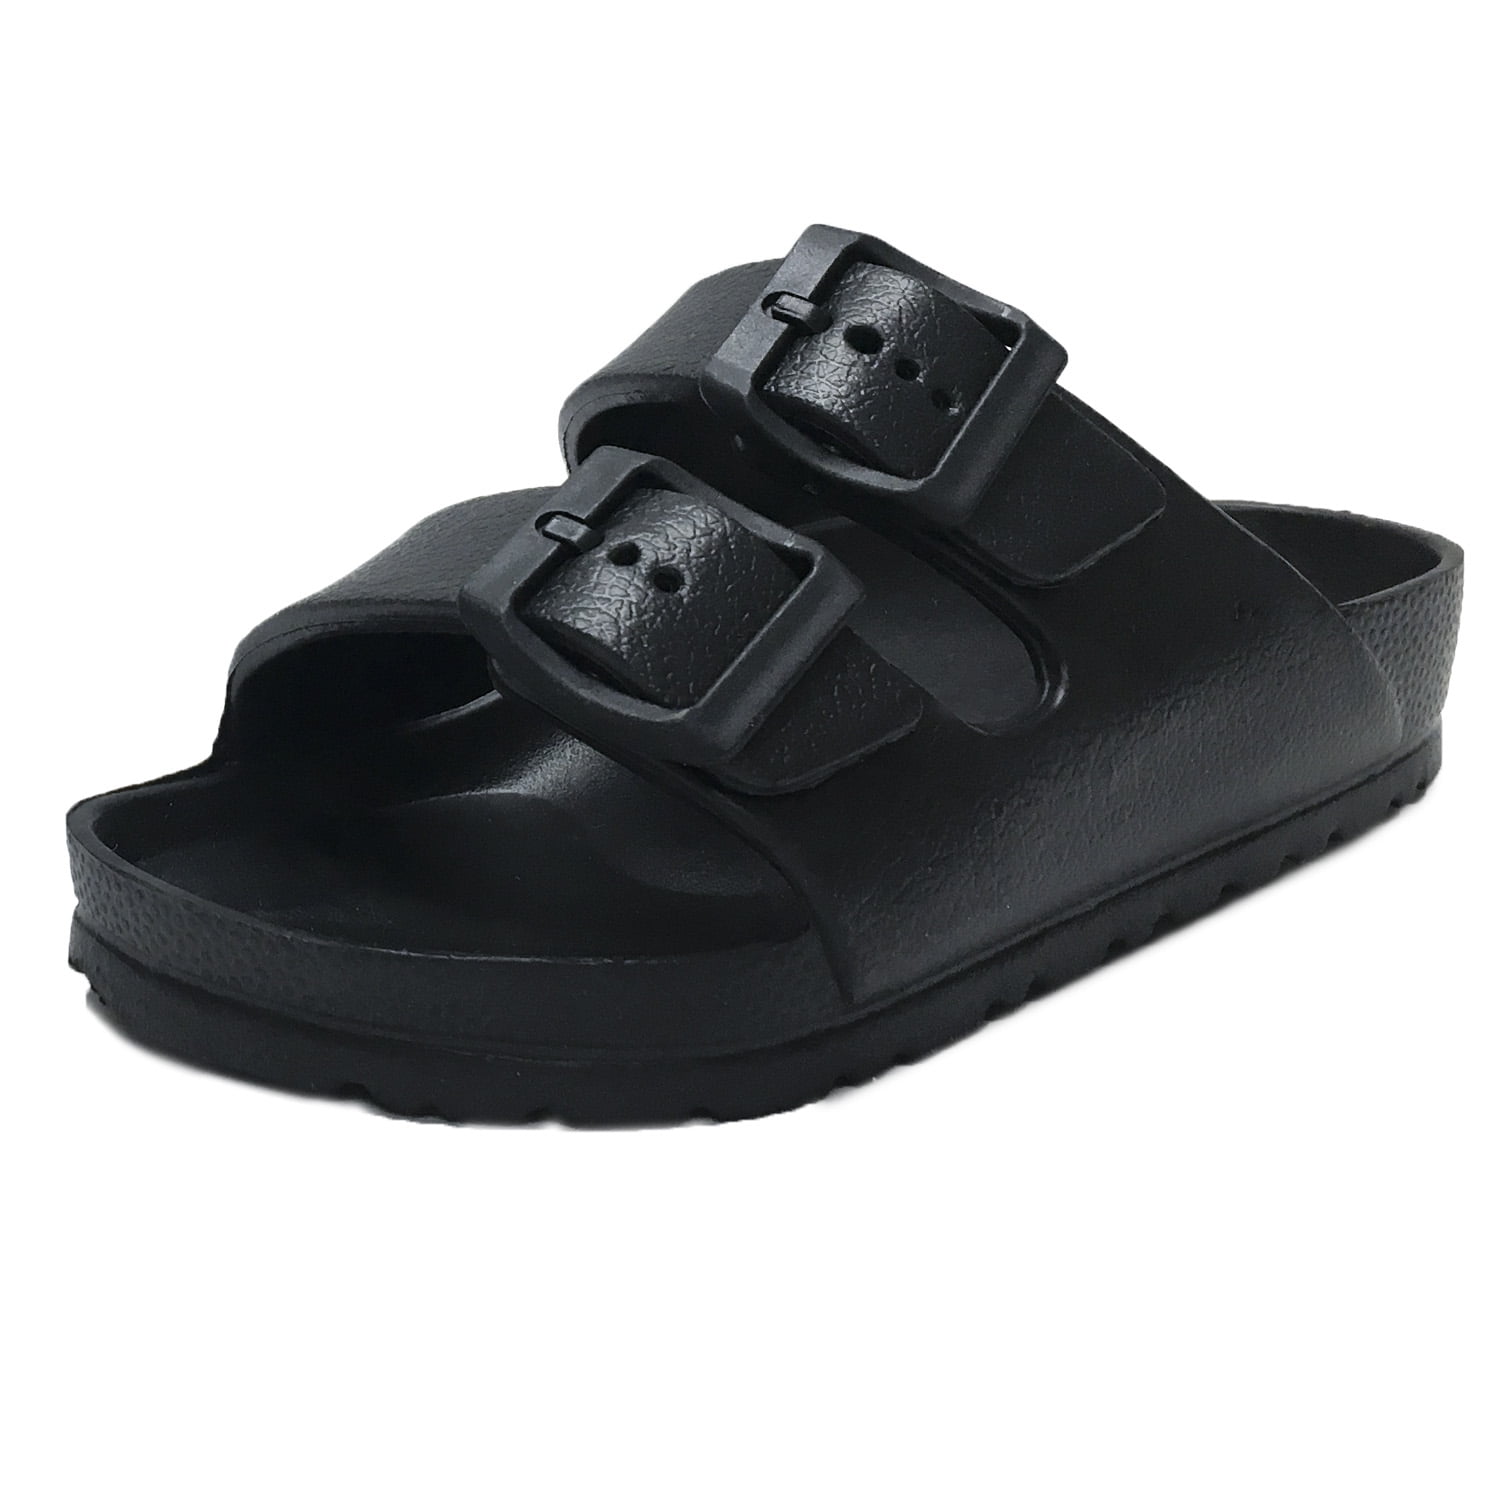 rubber double buckle sandals